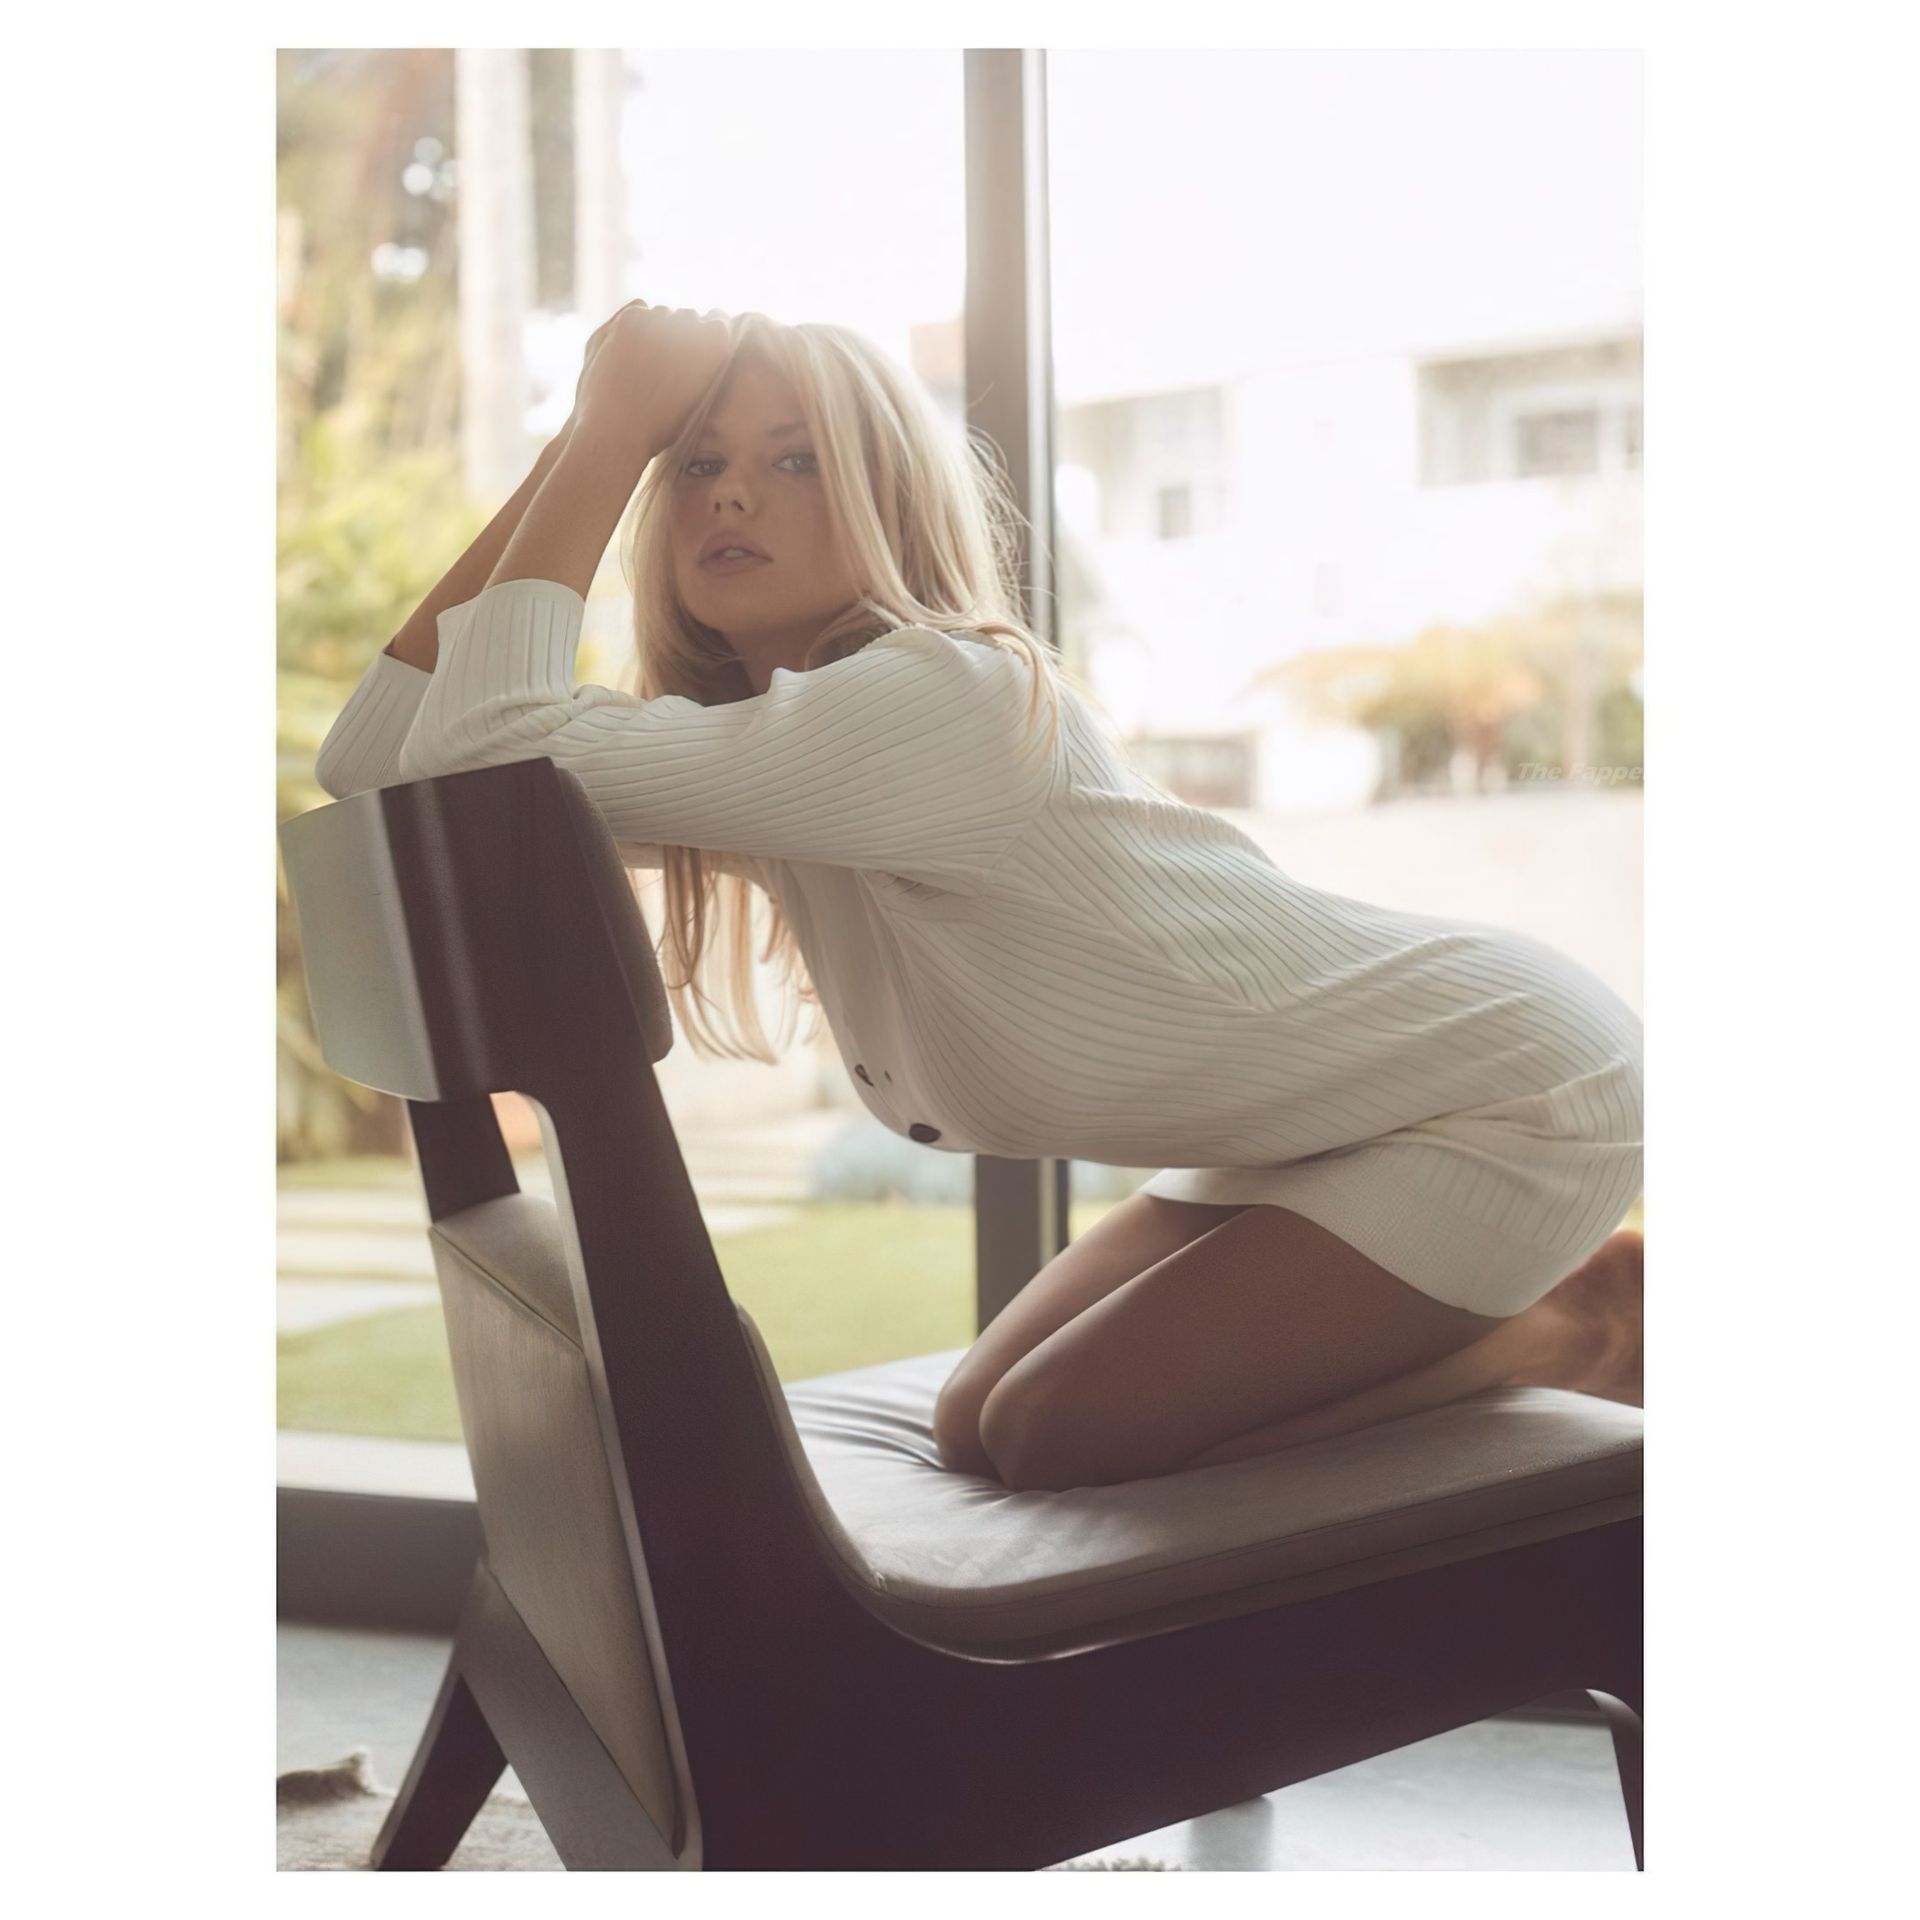 Charlotte McKinney Sexy - Grazia Magazine (8 Photos)